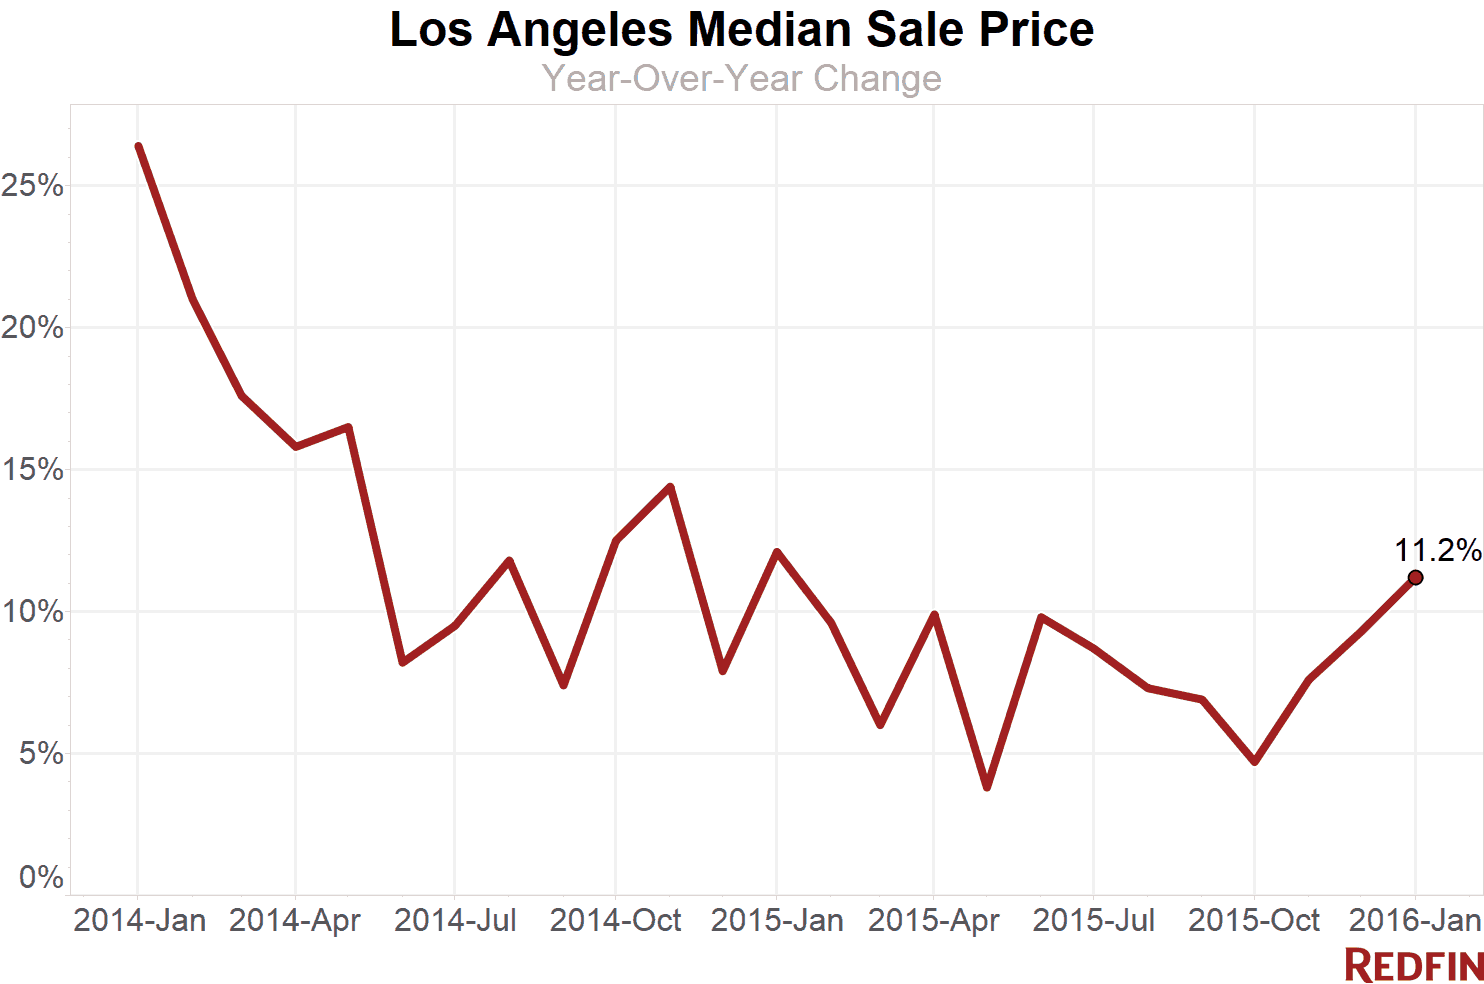 Median Sale Price LA Jan 2016